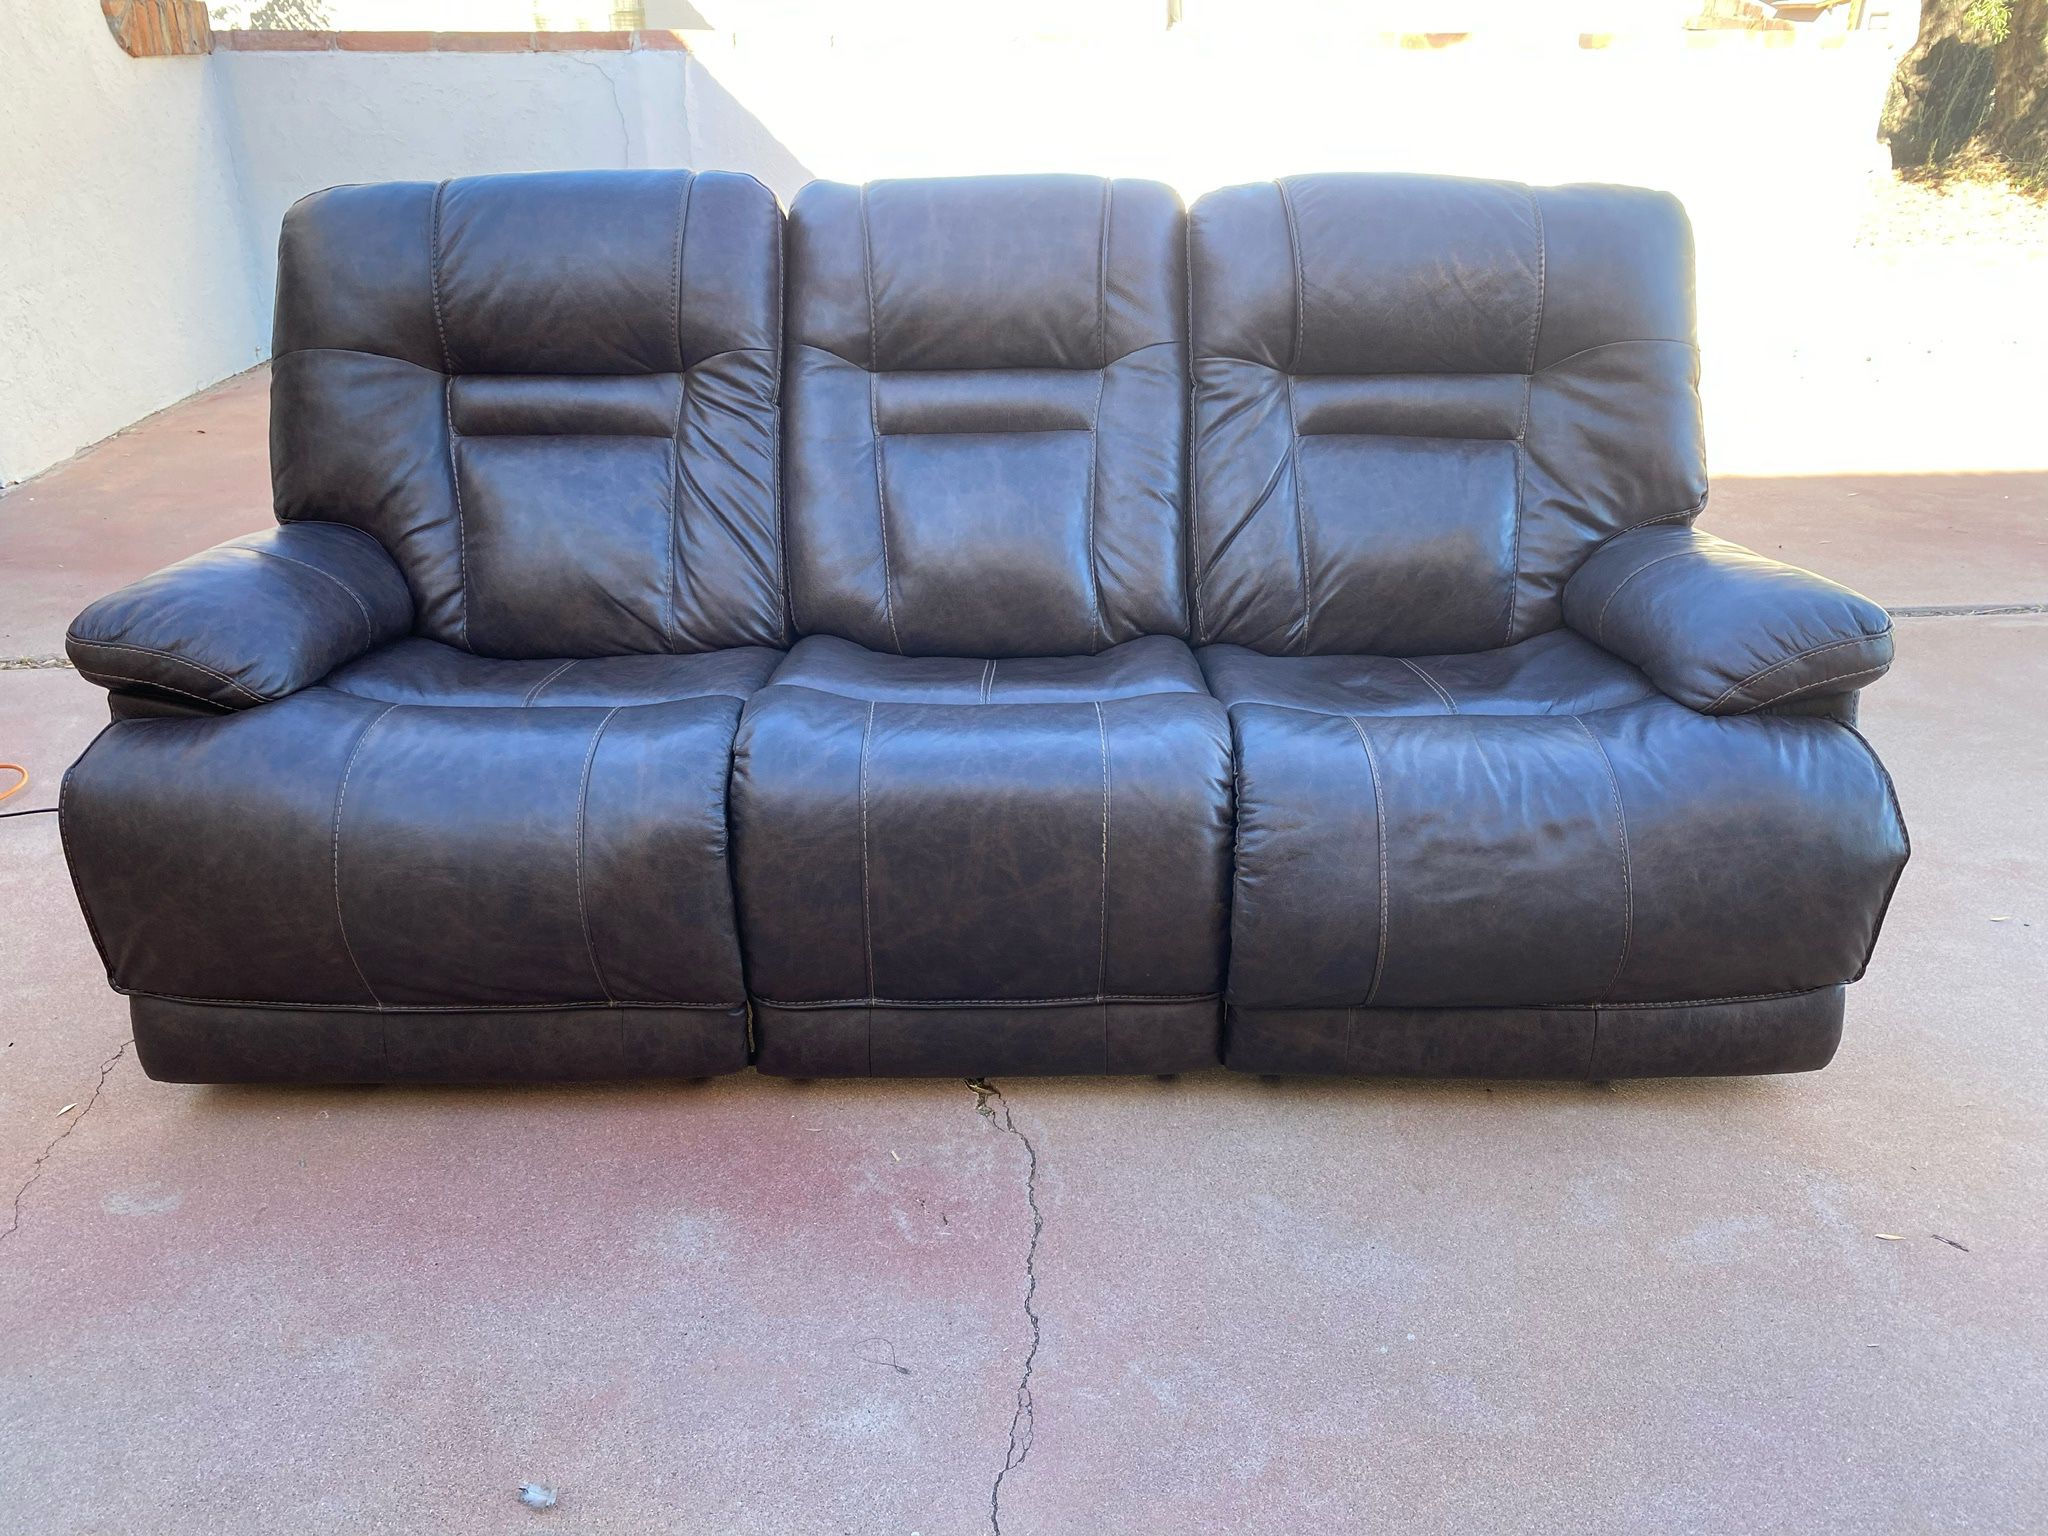 Full Leather Reclining Sofa